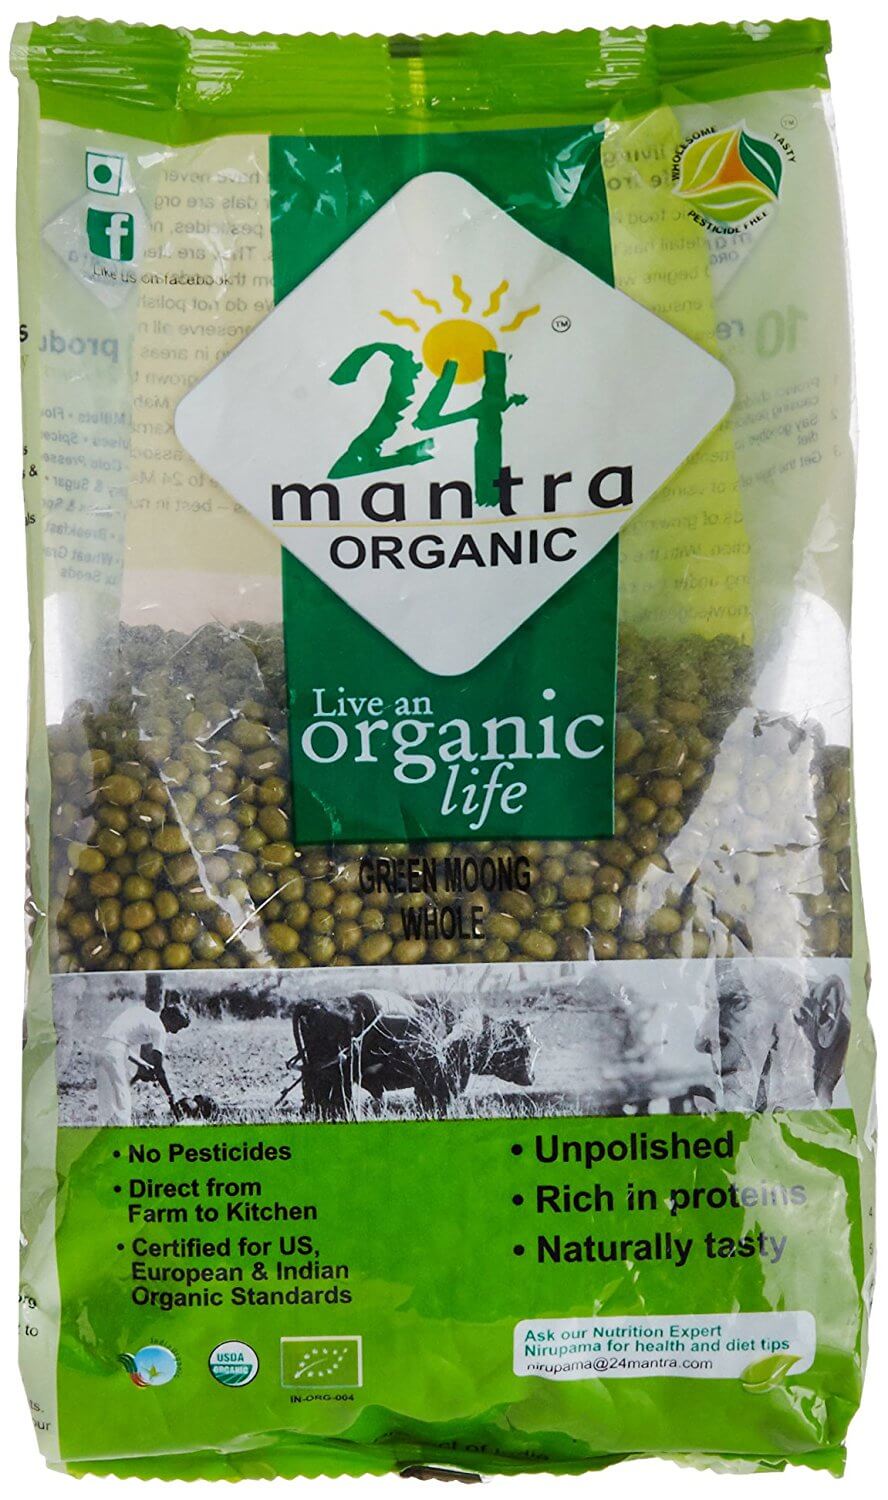 24 Mantra Organic Green Moong Whole, 500g